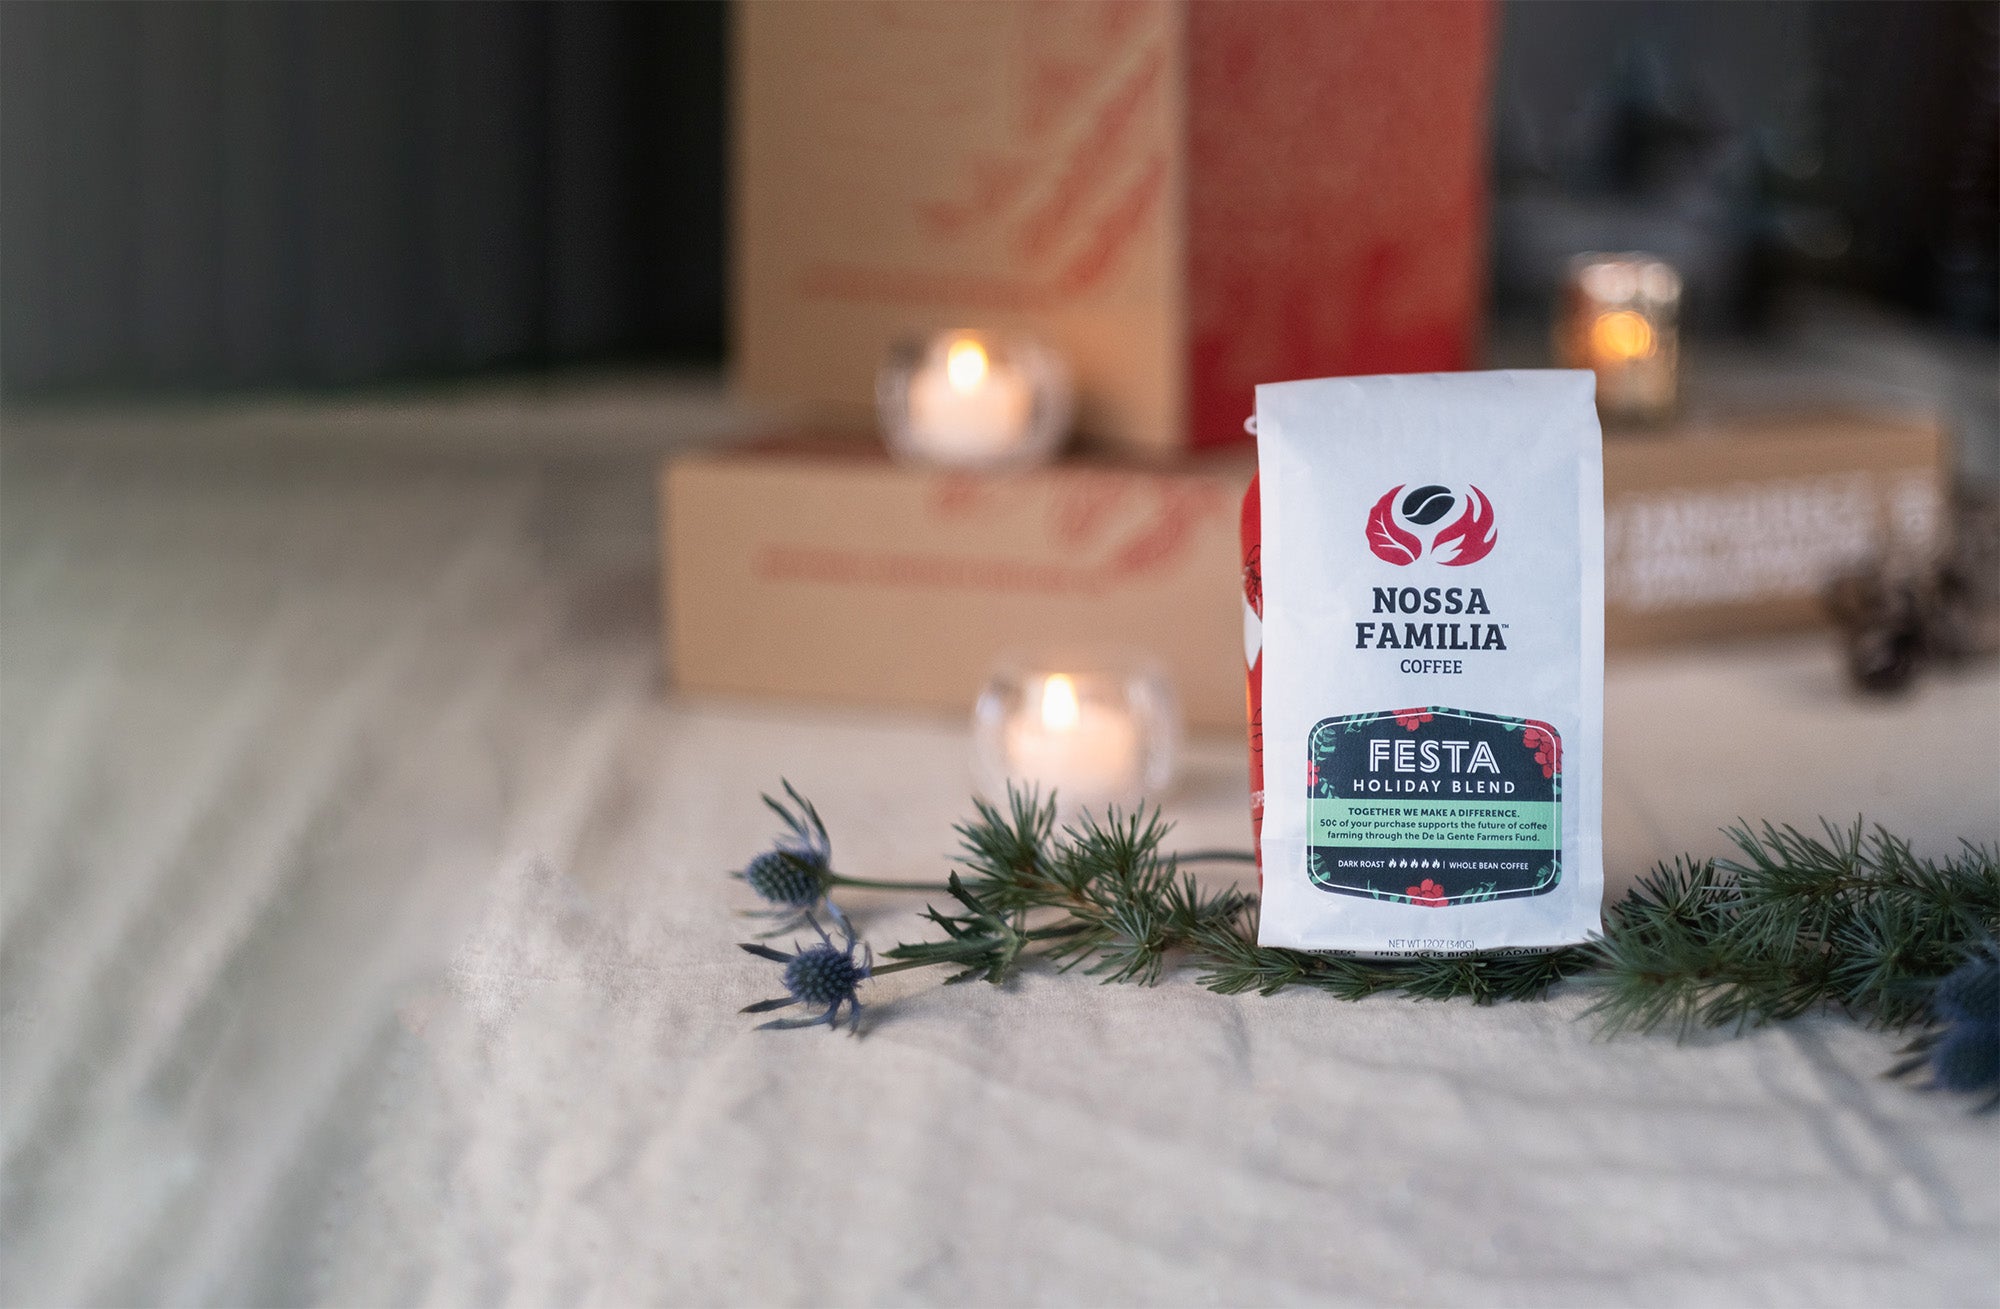 Nossa Familia Coffee Festa Holiday Blend gives back!